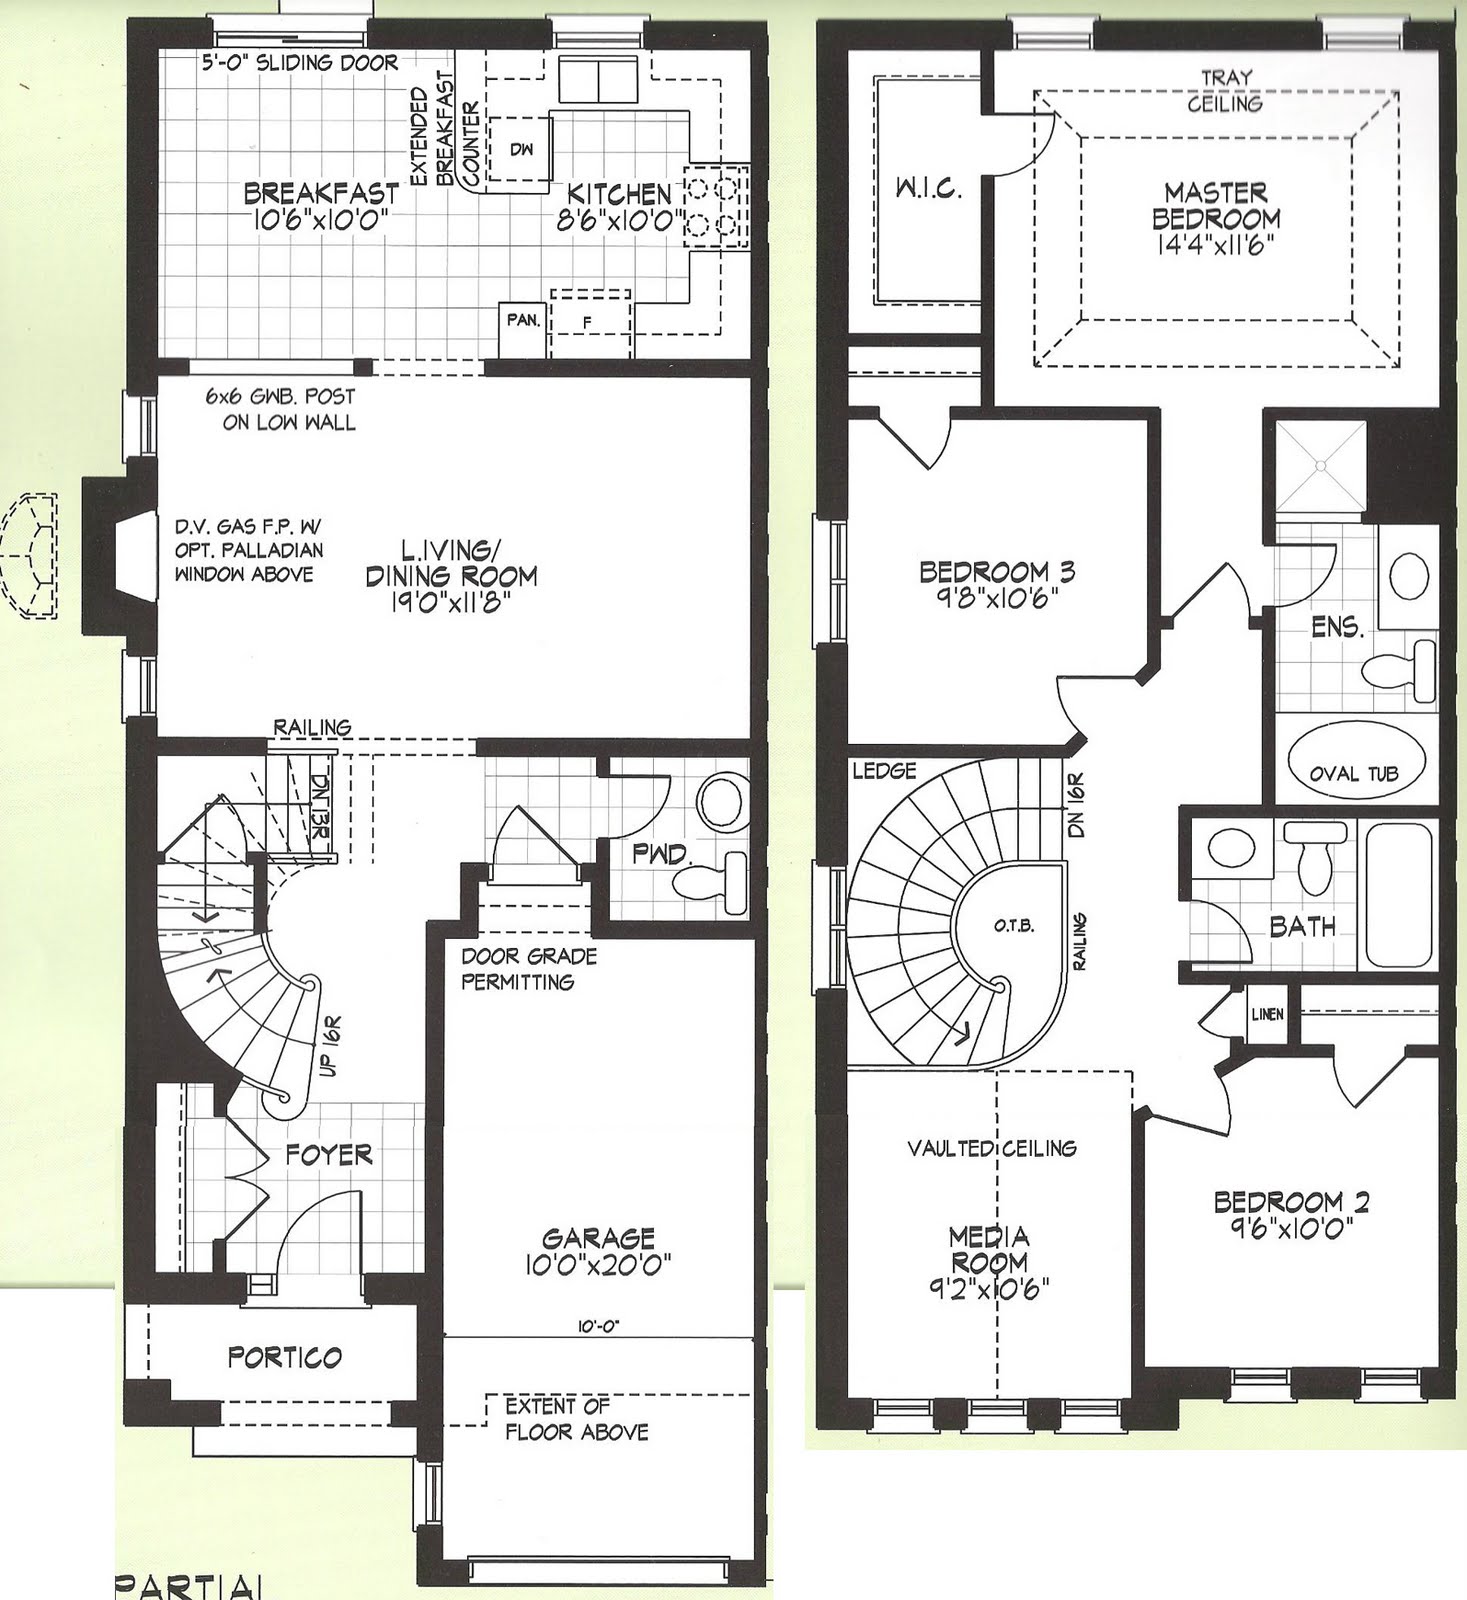 Eames House Floor Plan Dimensions